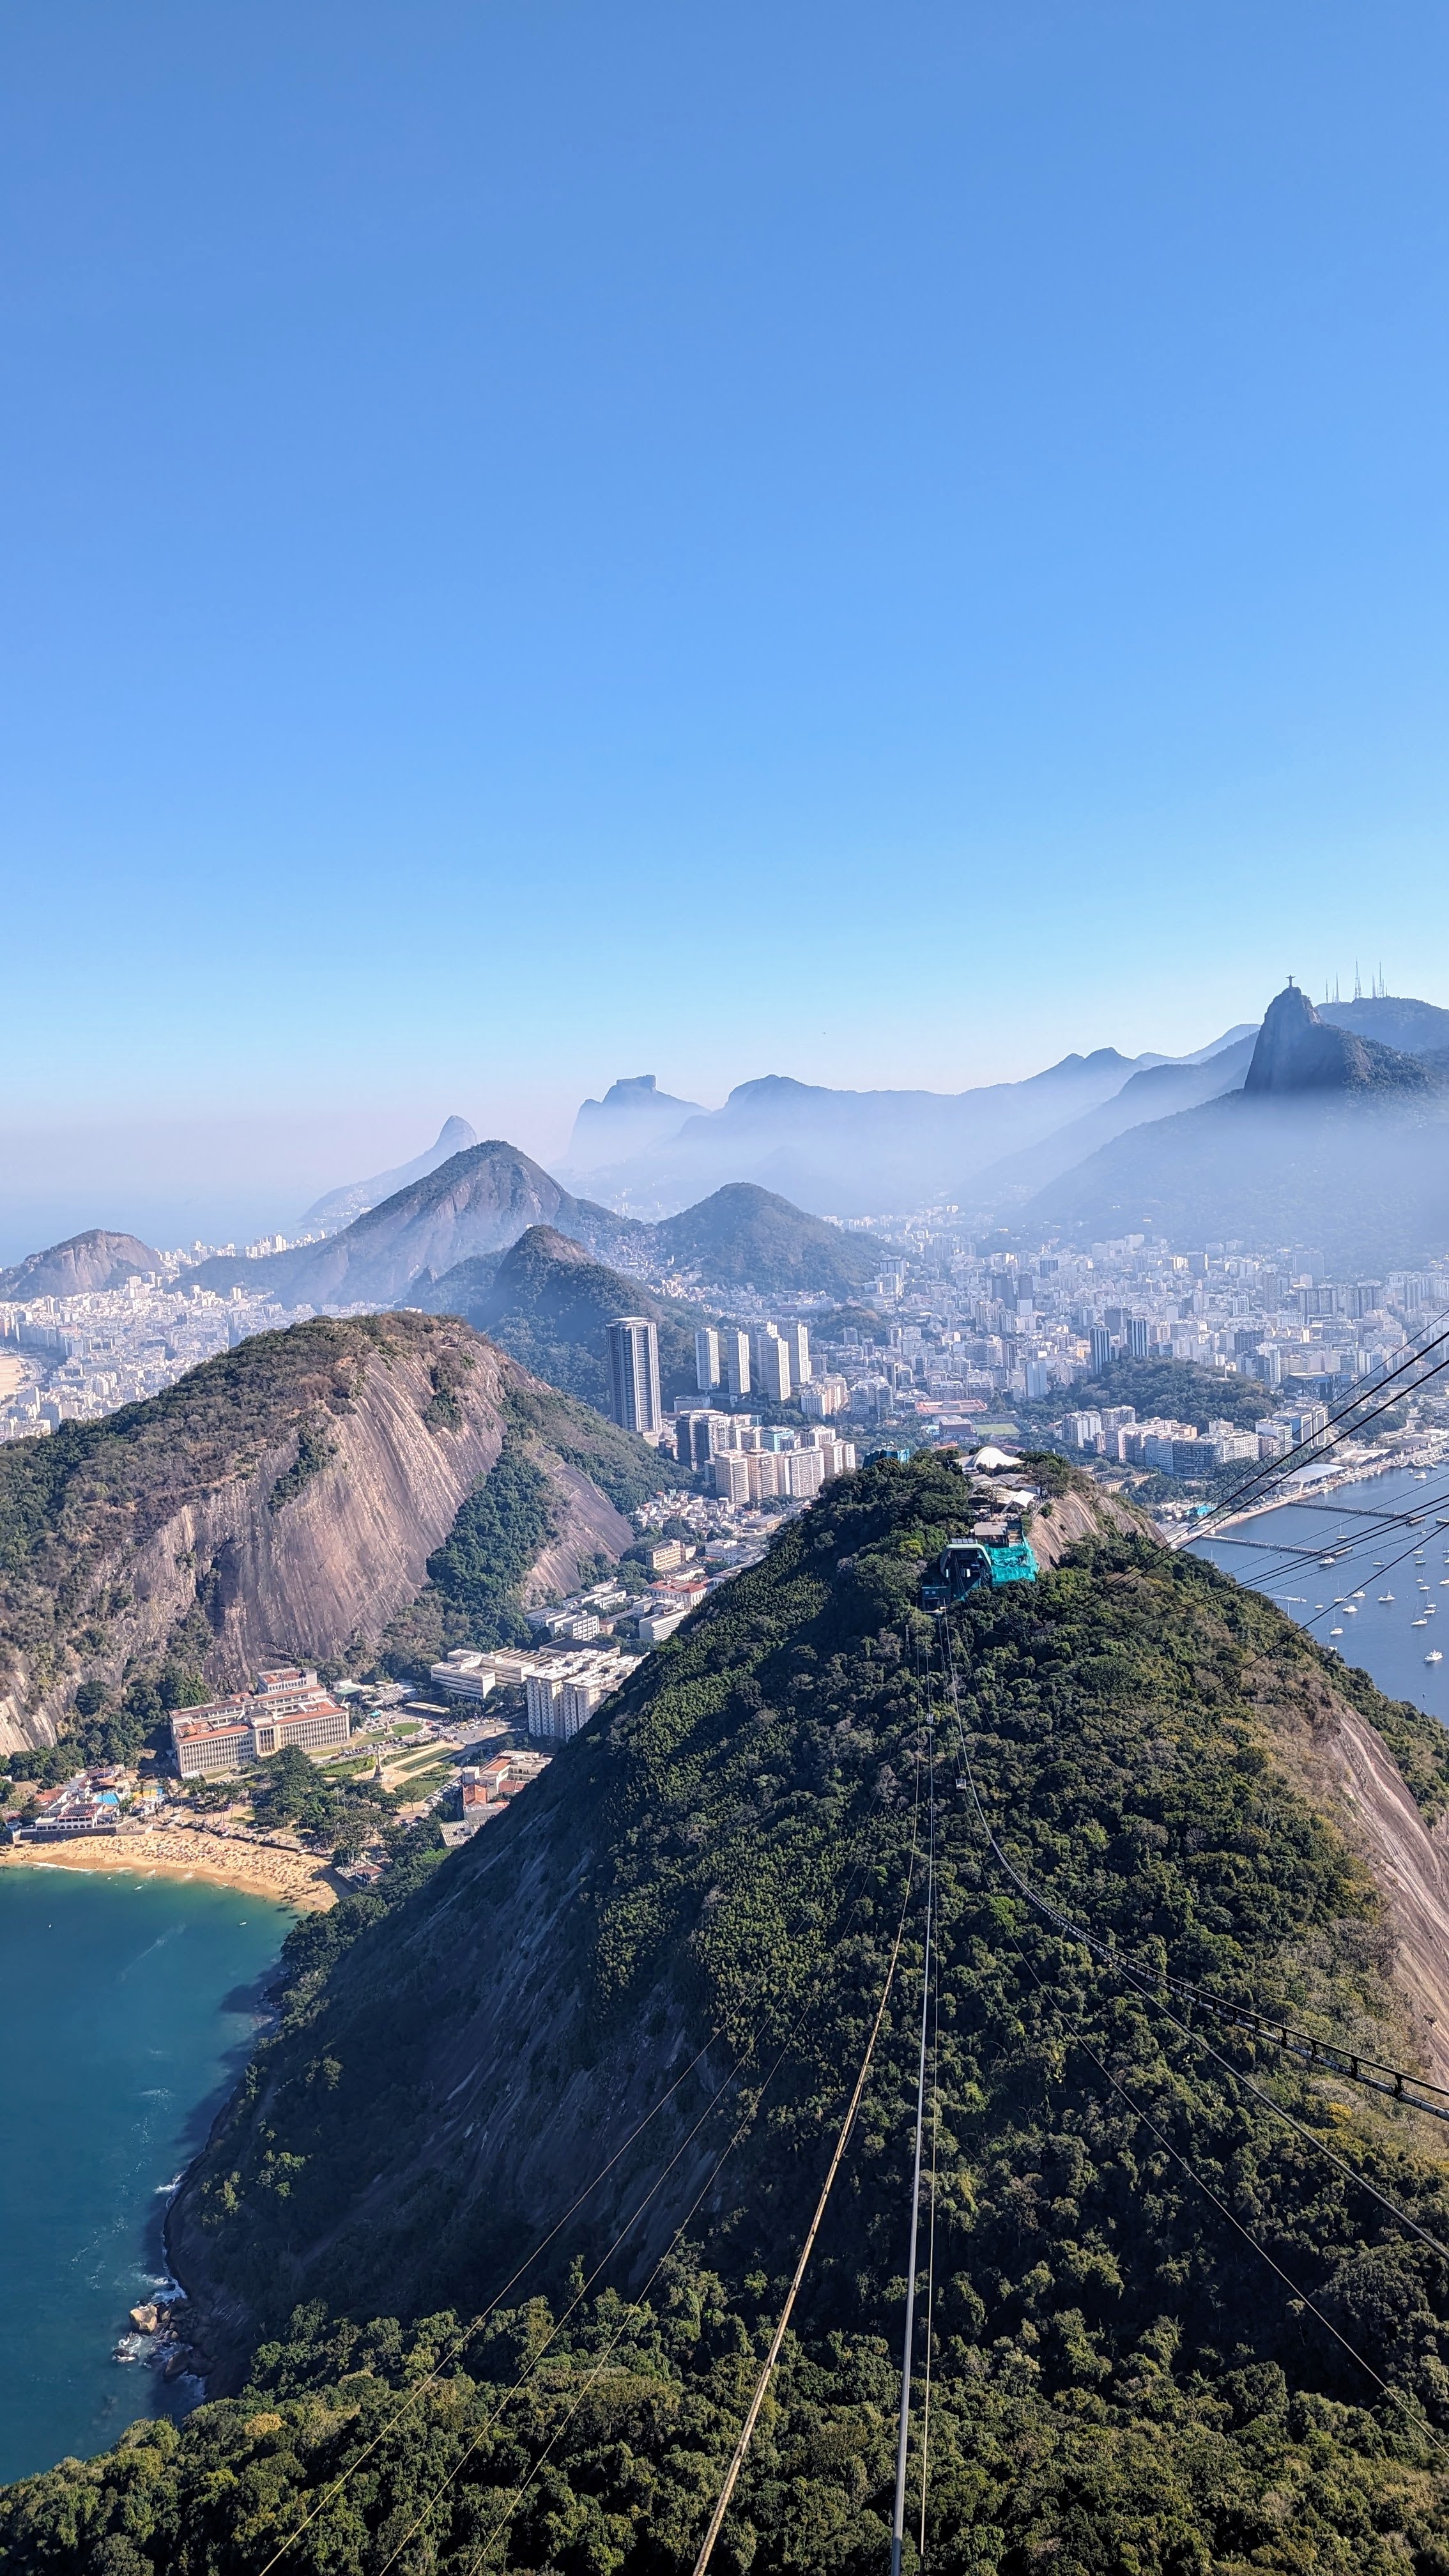 The Sugar Loaf in Rio